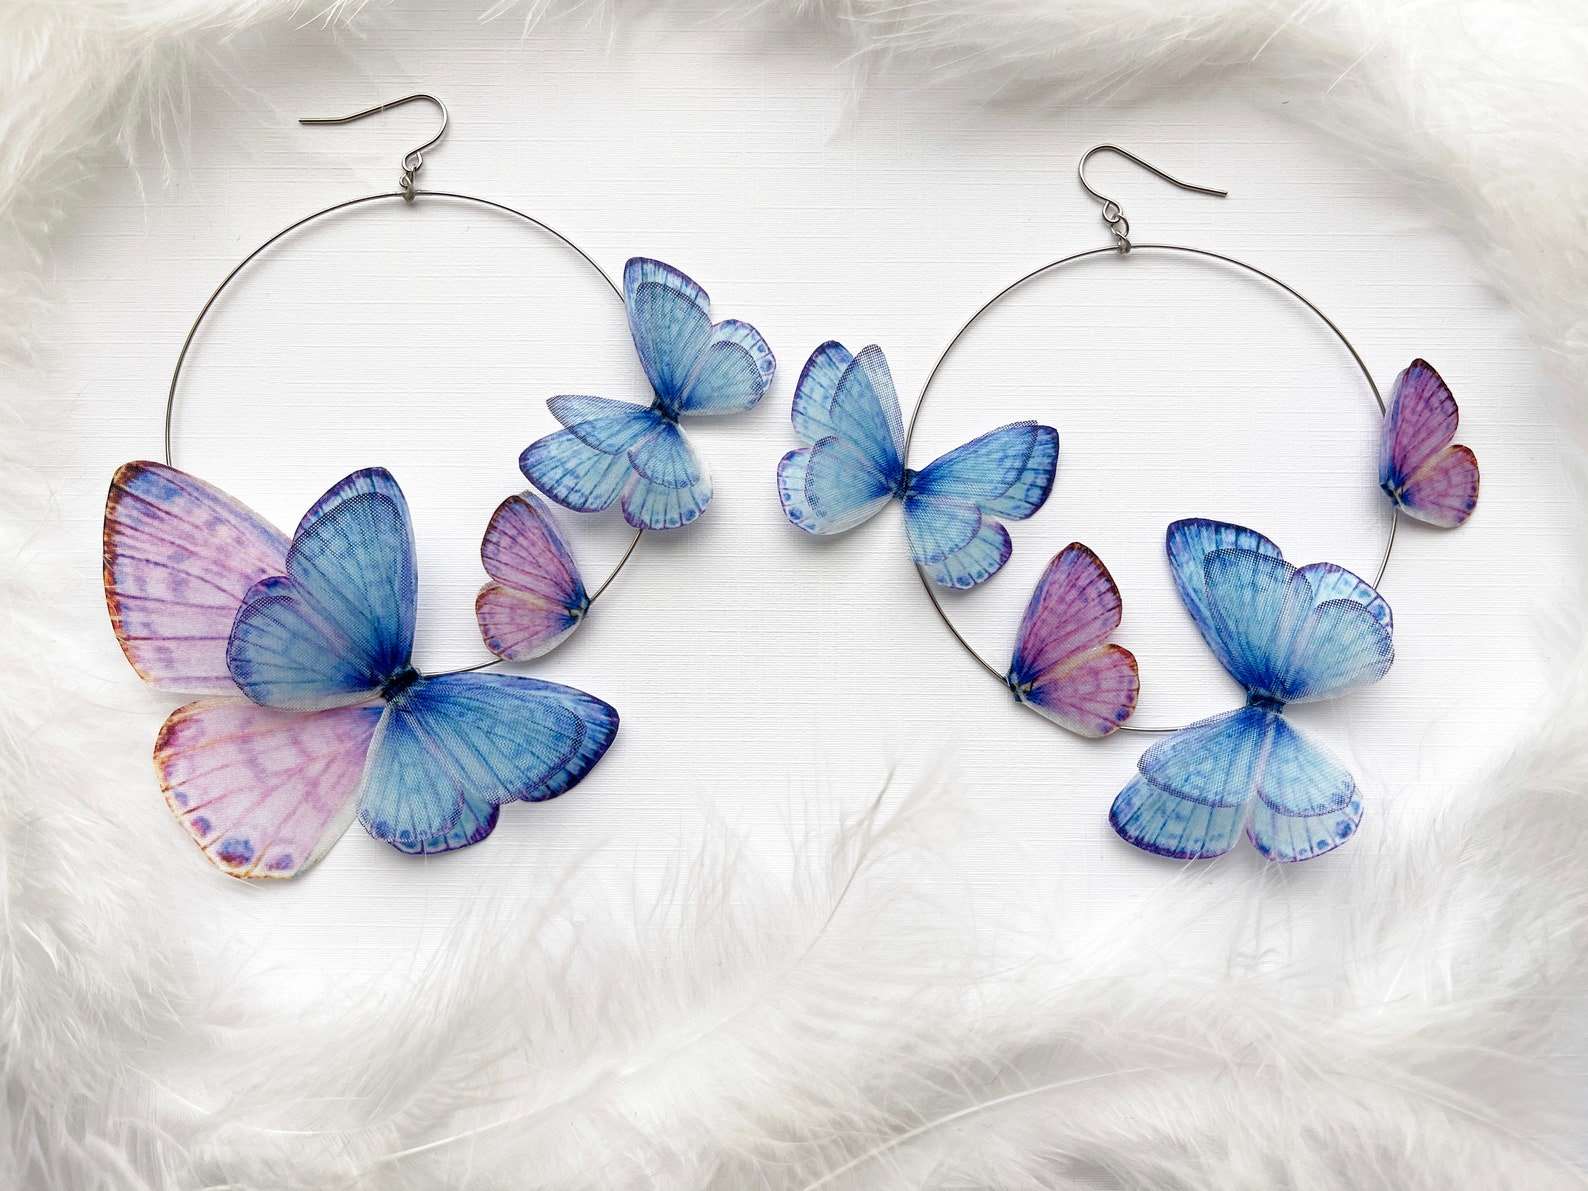 Handmade Boho Hoop Earrings with Faux Butterflies on White Background